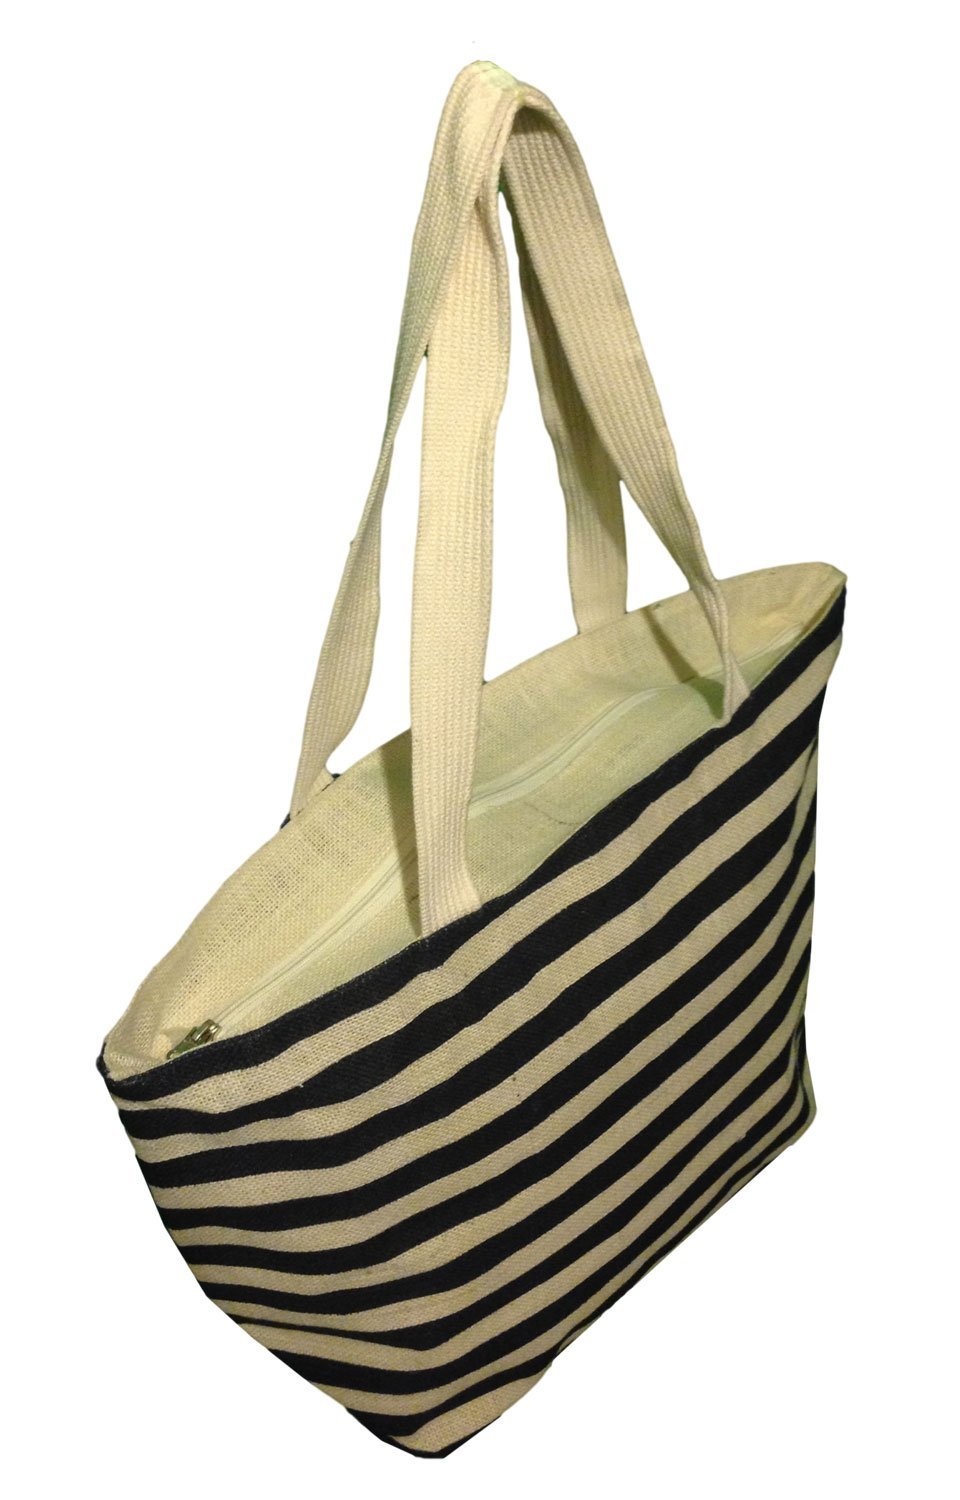 Burlap Beach Bag with Stripes Ivory/Navy 21"x13.5'x5.5"